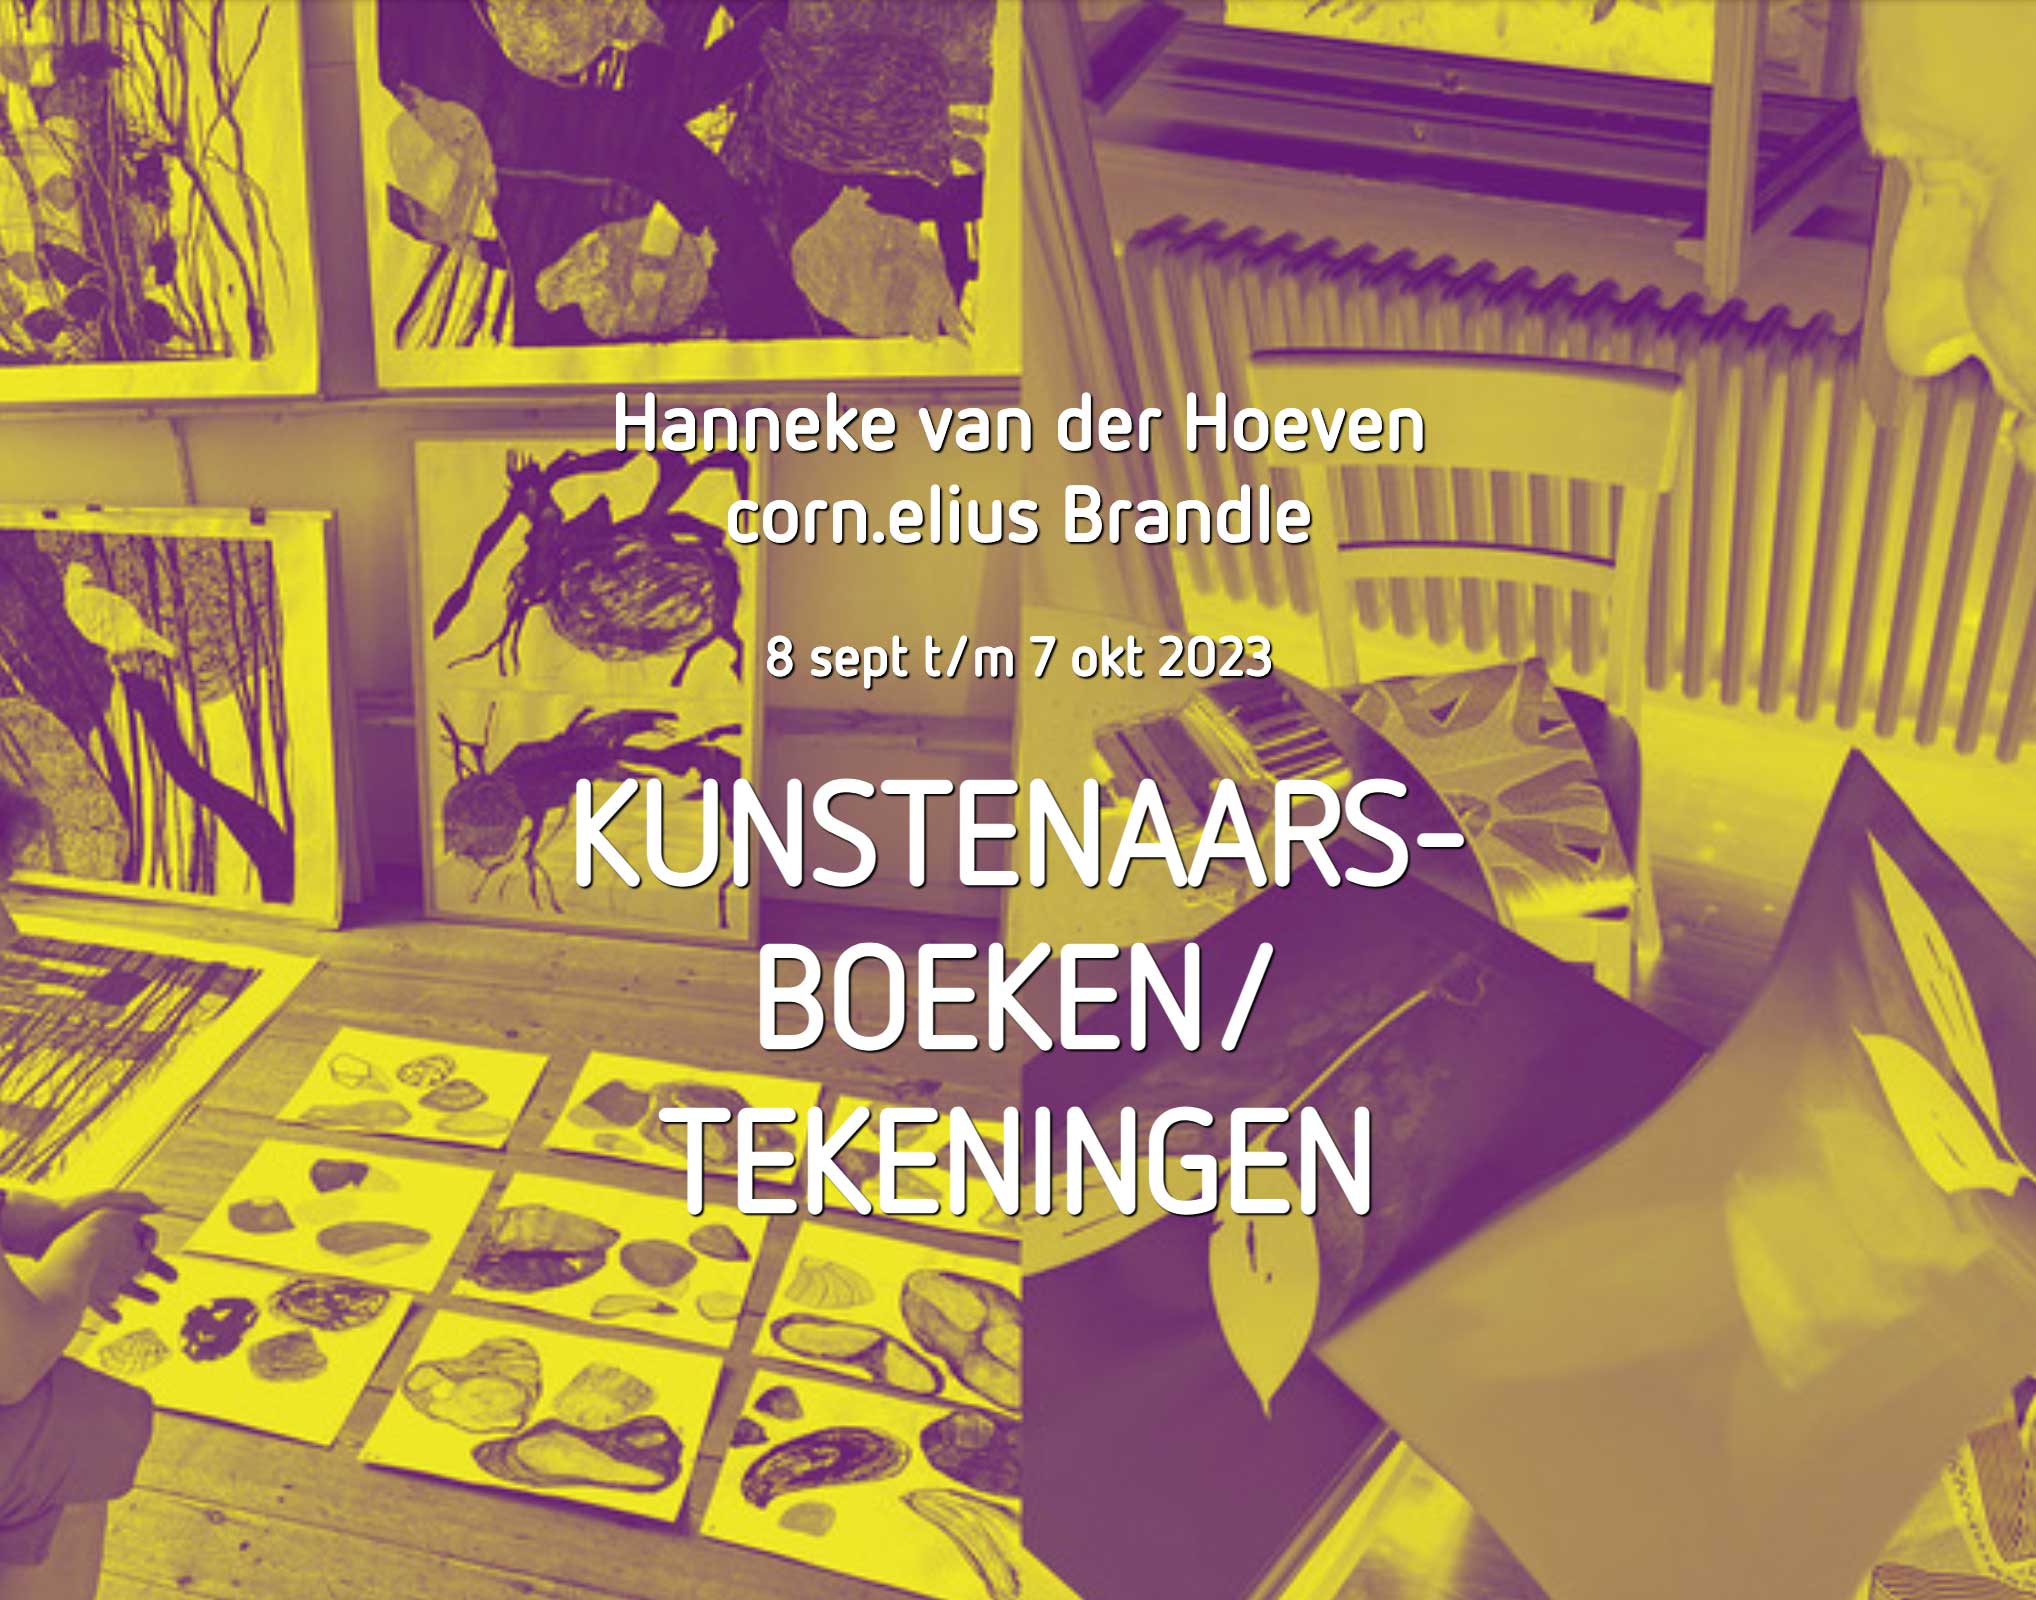 Introbeeld Hanneke van der Hoeven en corn.elius Brandle